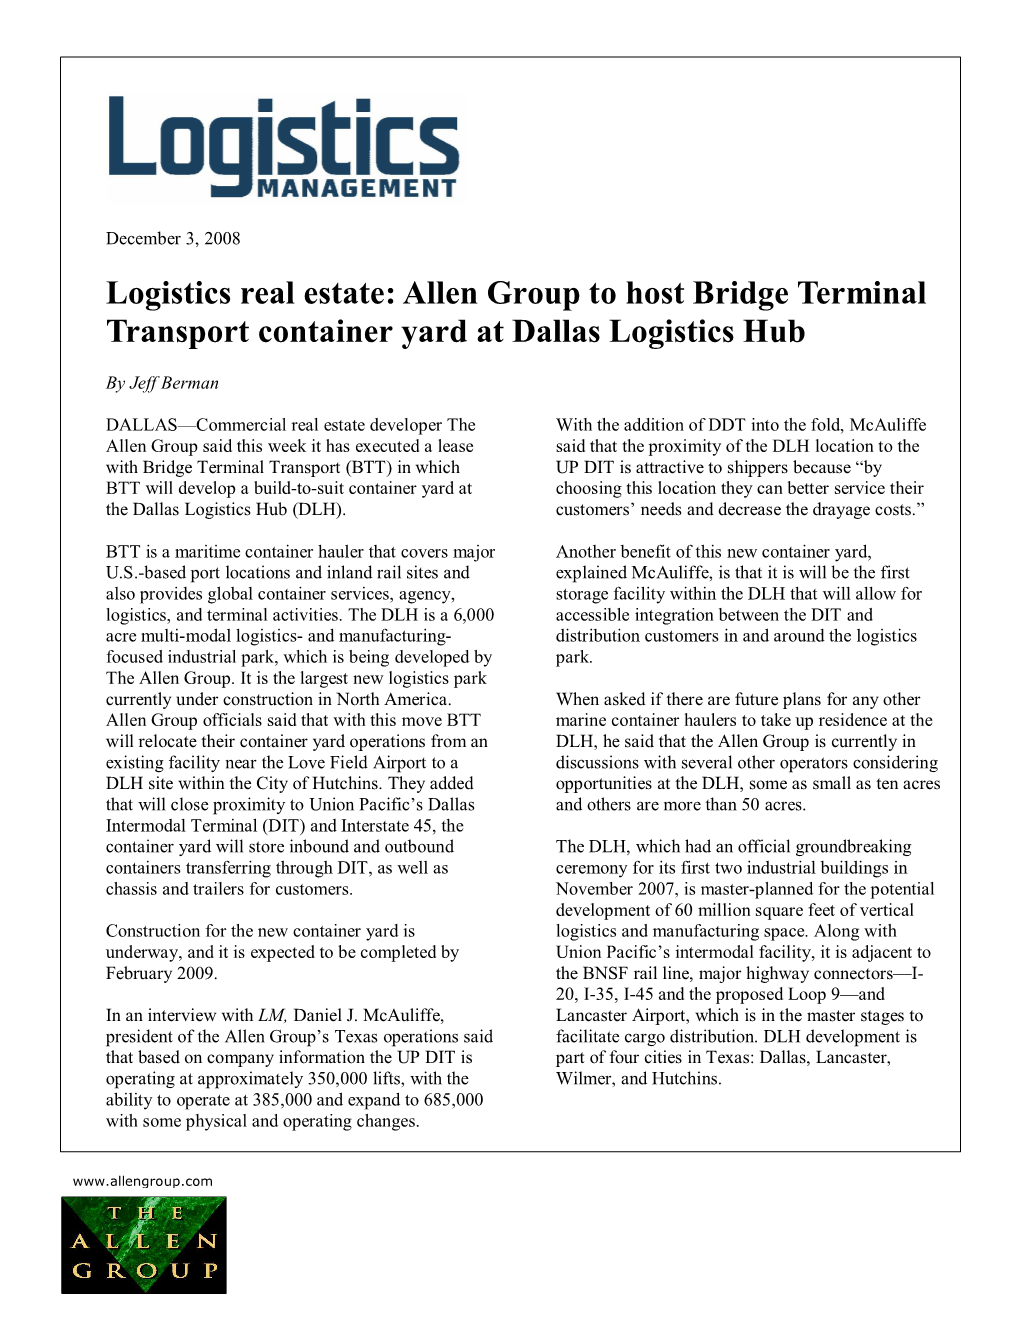 Logistics Real Estate: Allen Group to Host Bridge Terminal Transport Container Yard at Dallas Logistics Hub